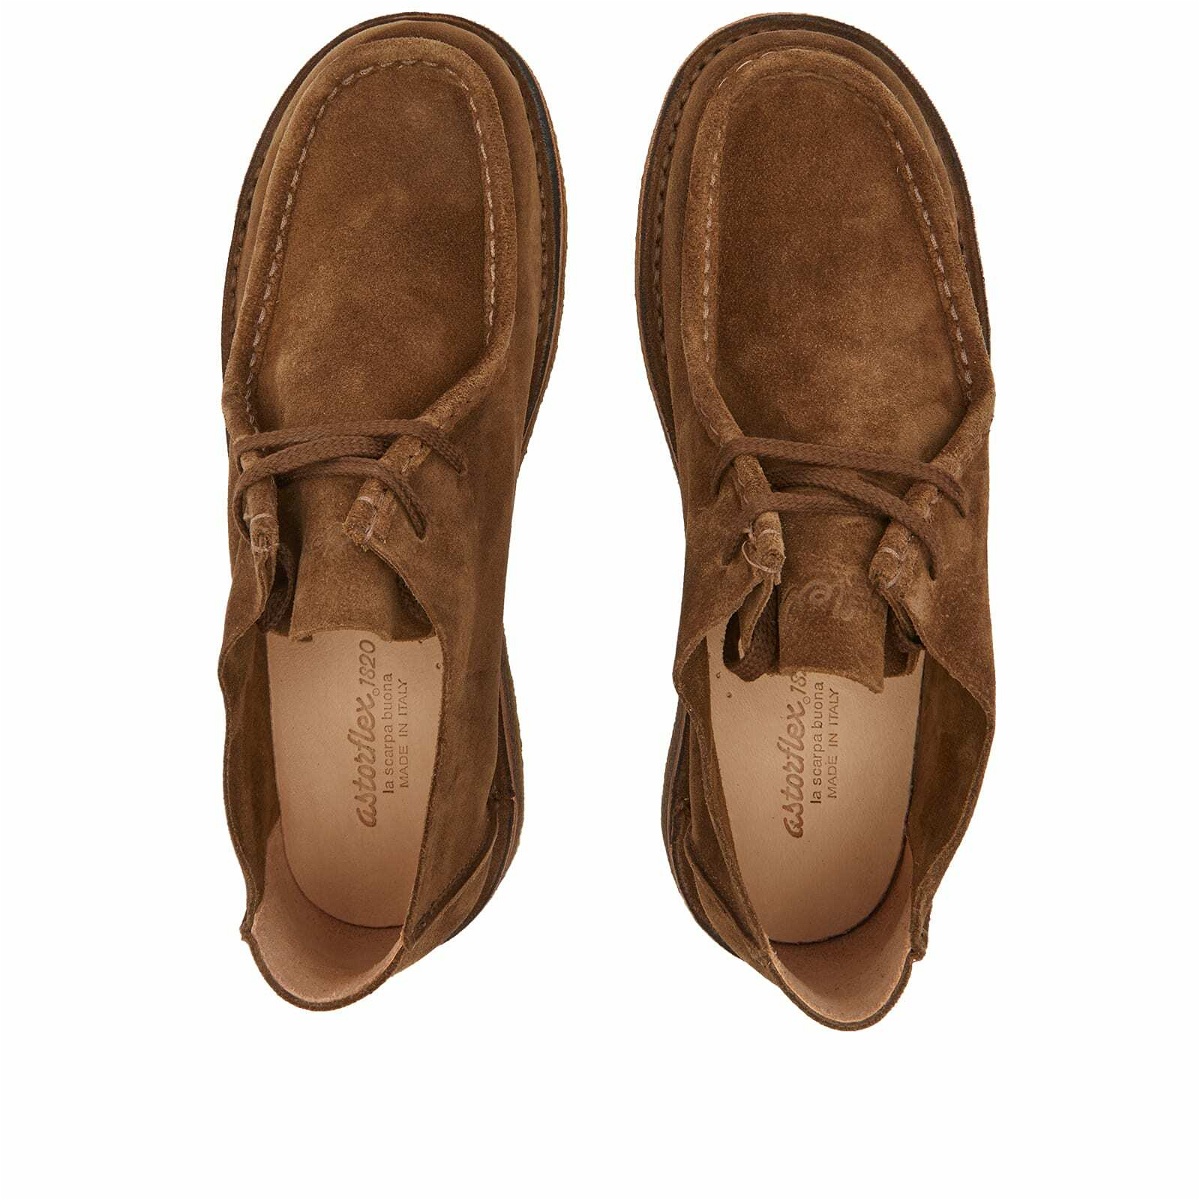 Brown Derby shoe in suede - Astorflex